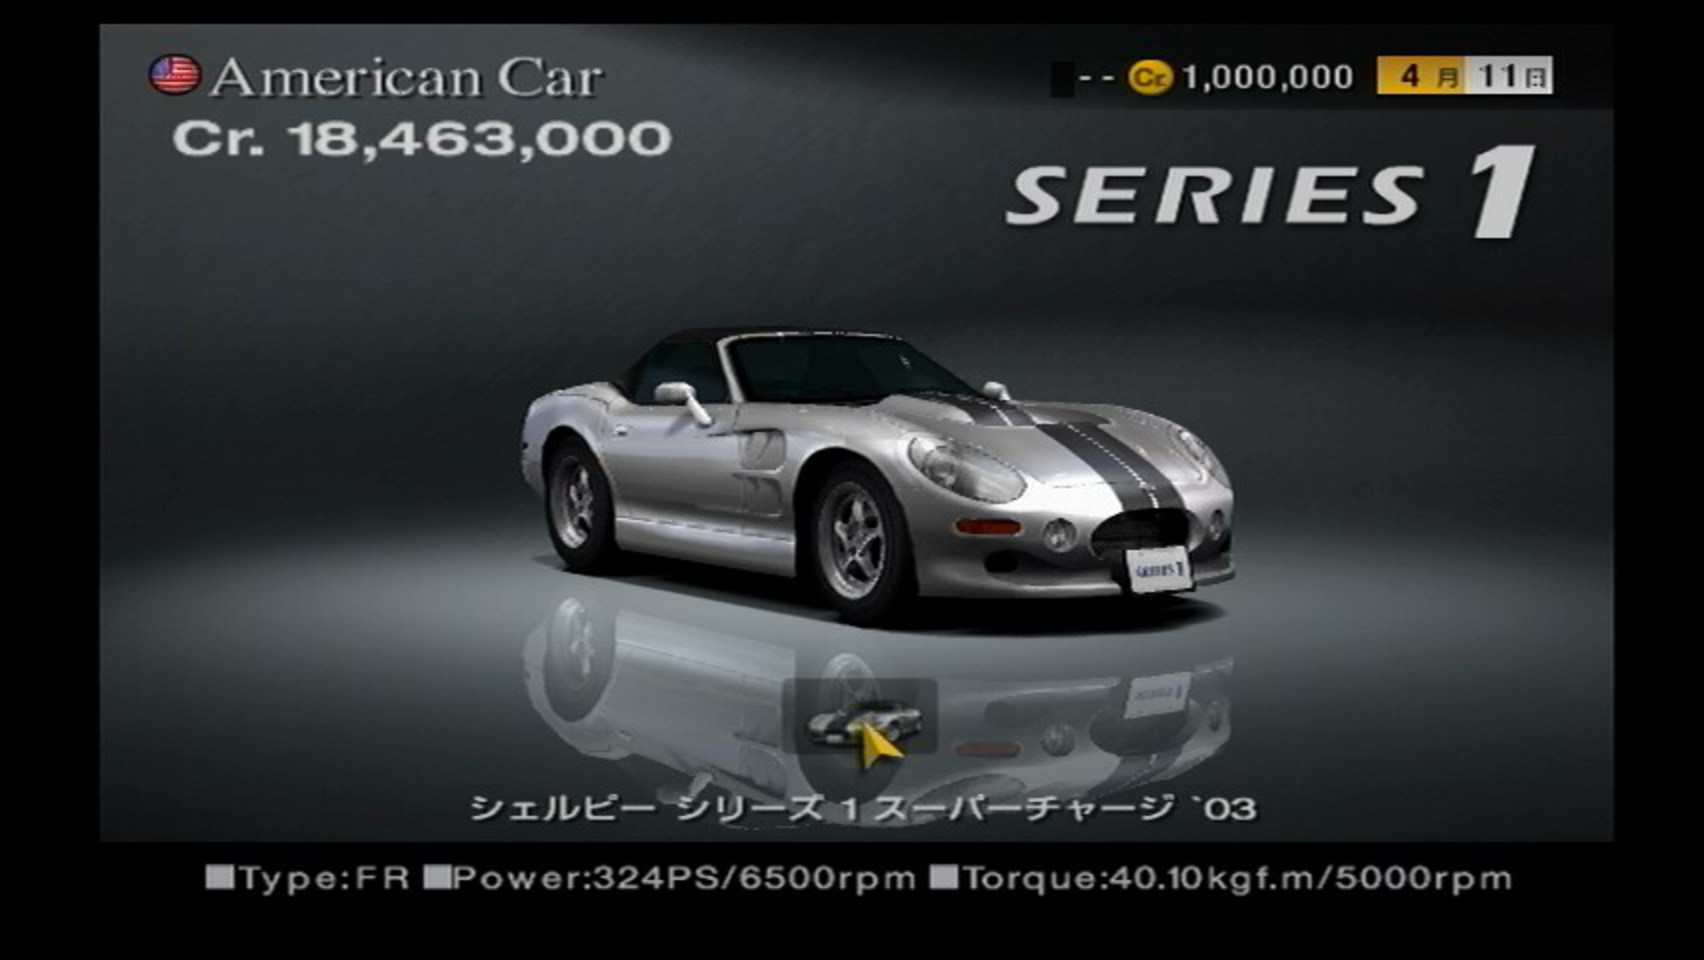 Gran Turismo 4 Cars - Image: american/